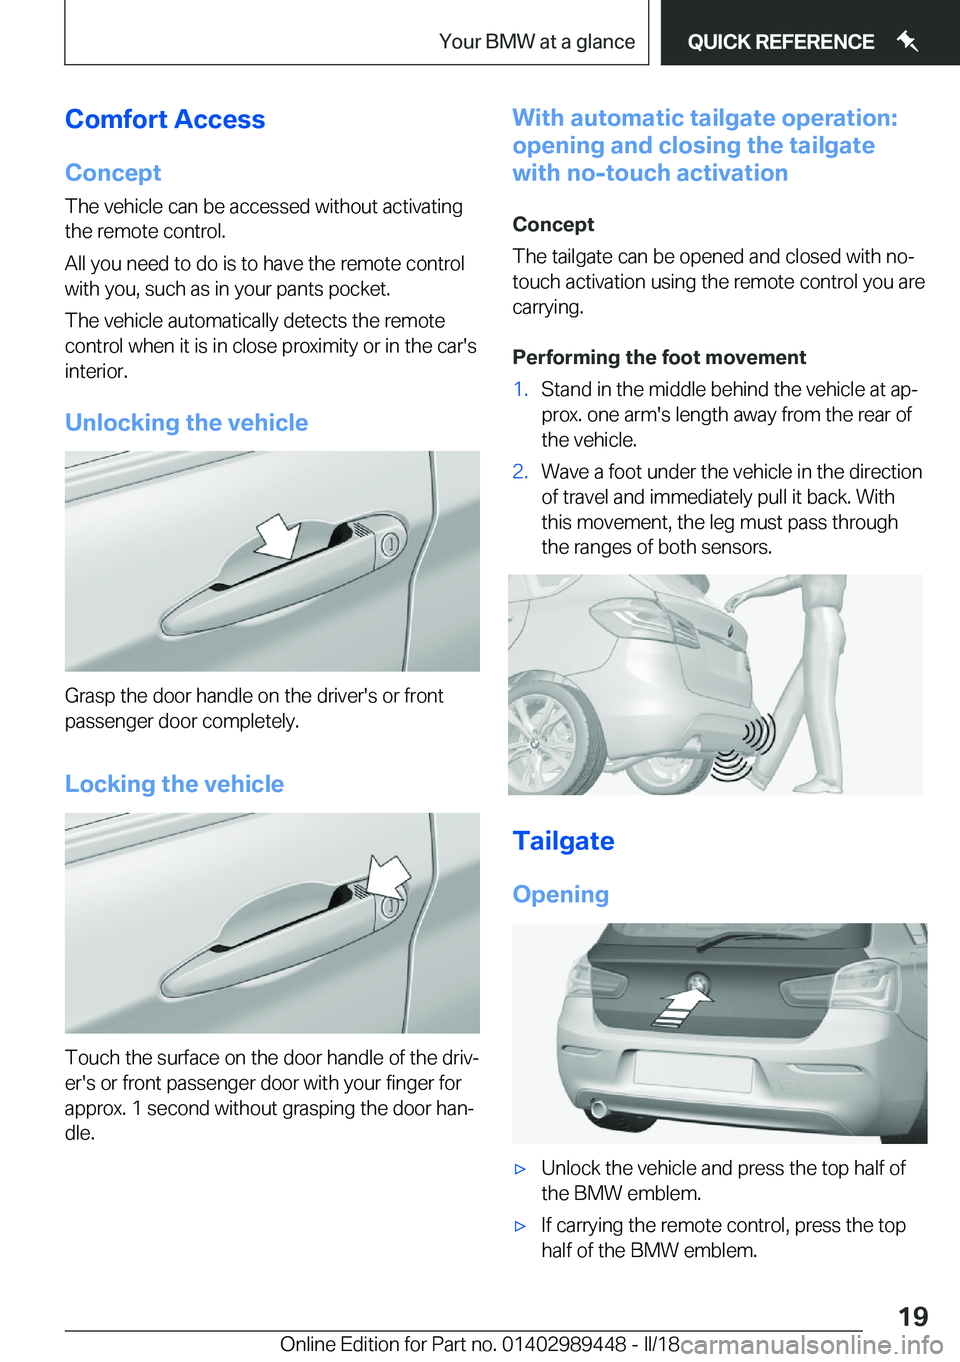 BMW X2 2018 User Guide �C�o�m�f�o�r�t��A�c�c�e�s�s�C�o�n�c�e�p�t
�T�h�e� �v�e�h�i�c�l�e� �c�a�n� �b�e� �a�c�c�e�s�s�e�d� �w�i�t�h�o�u�t� �a�c�t�i�v�a�t�i�n�g
�t�h�e� �r�e�m�o�t�e� �c�o�n�t�r�o�l�.
�A�l�l� �y�o�u� �n�e�e�d�